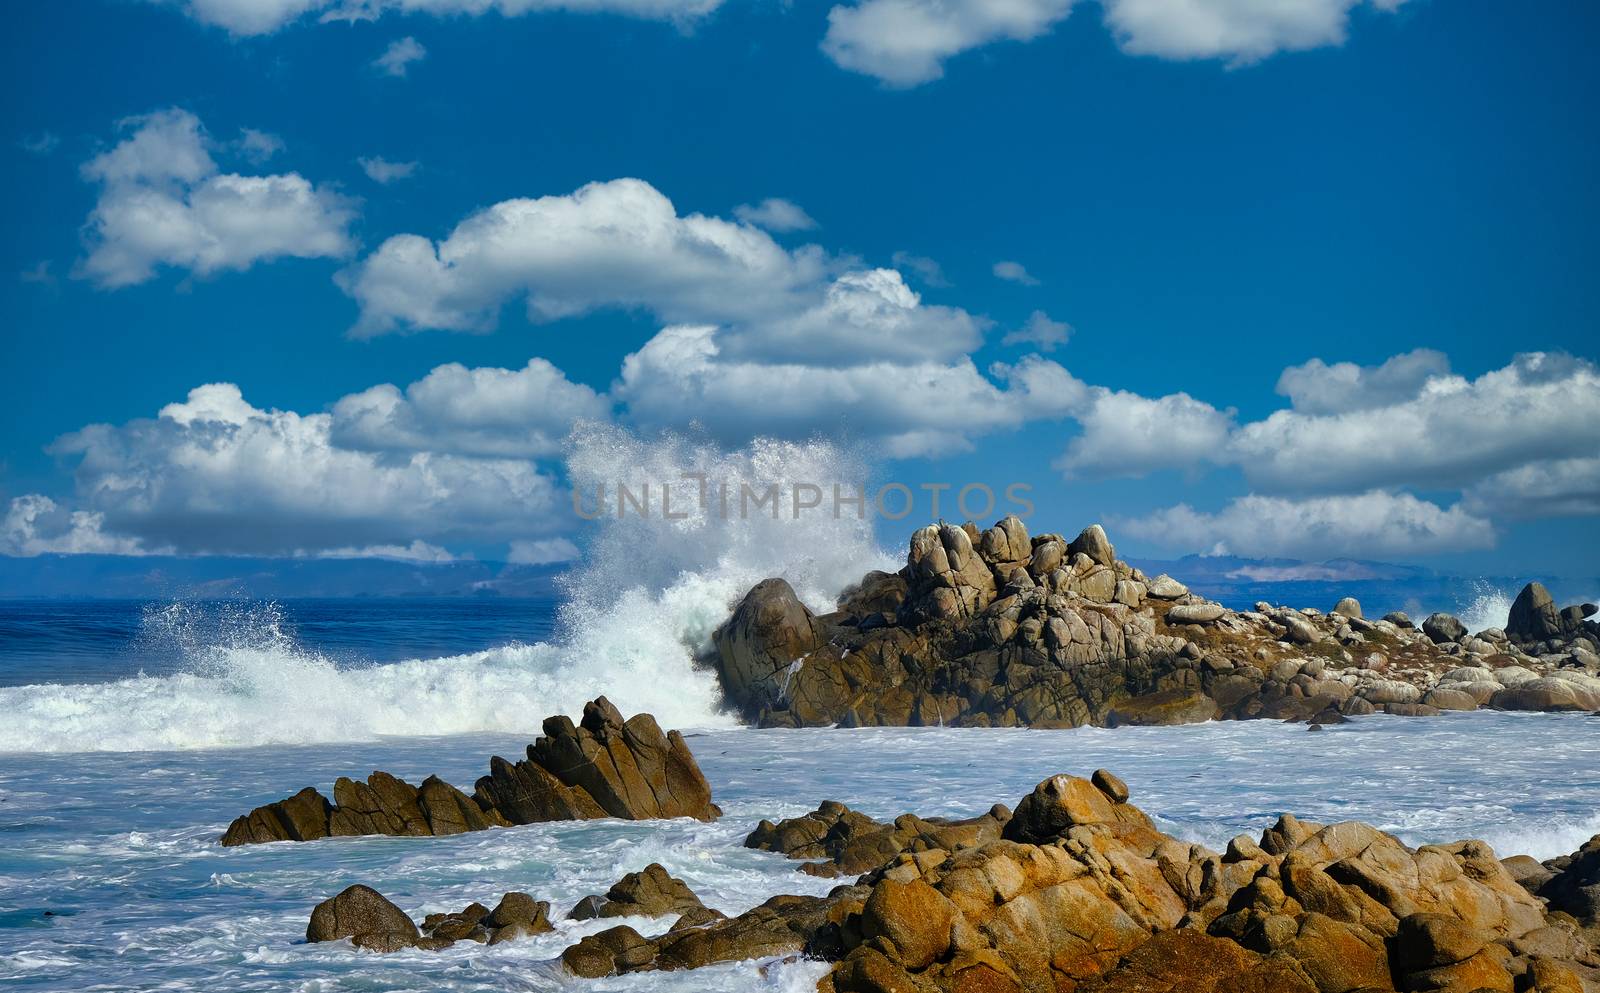 Pacific Coast Rocks and Surf near Monterey